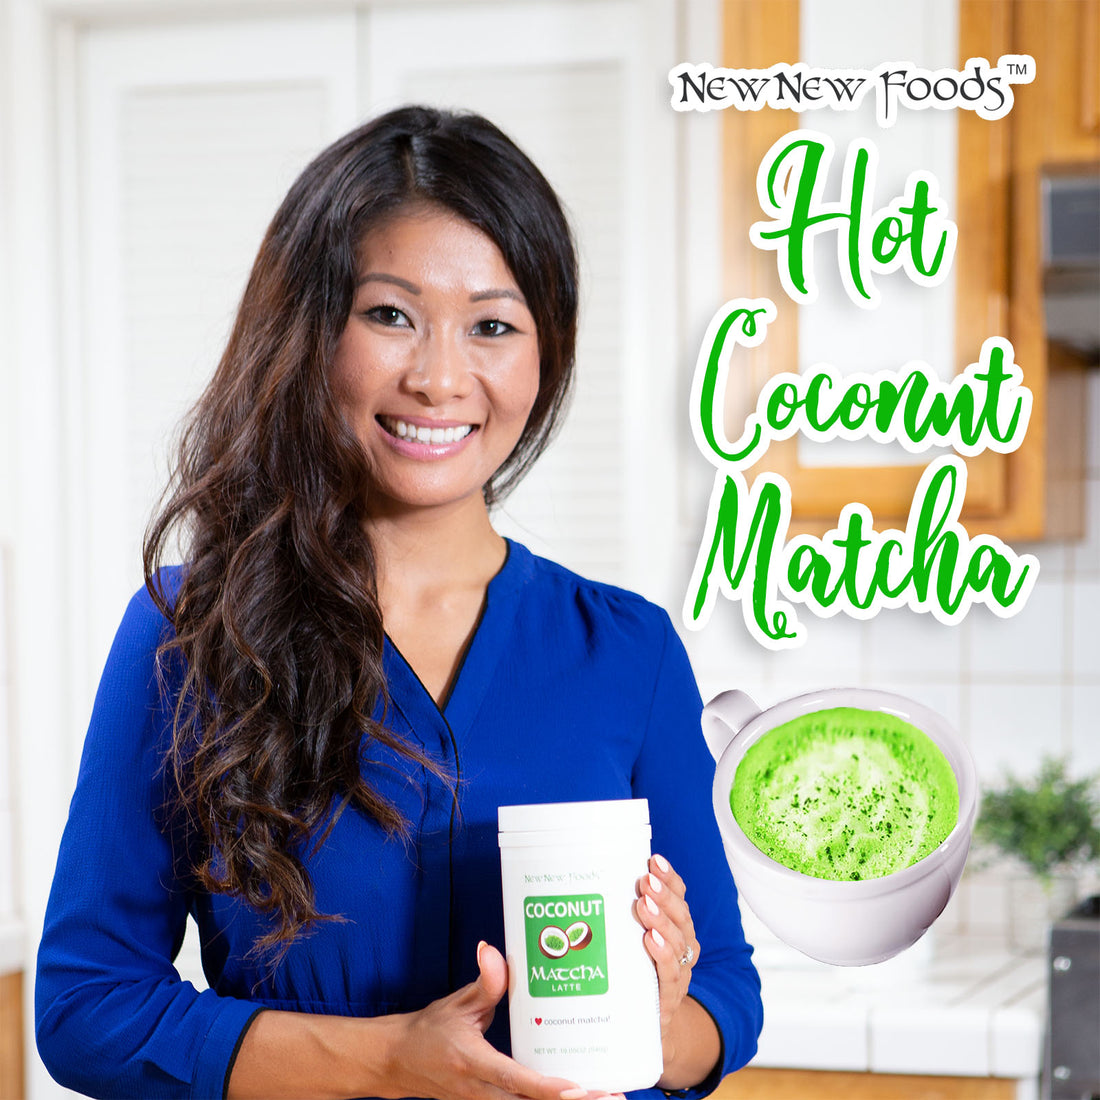 Hot Coconut Matcha Recipe